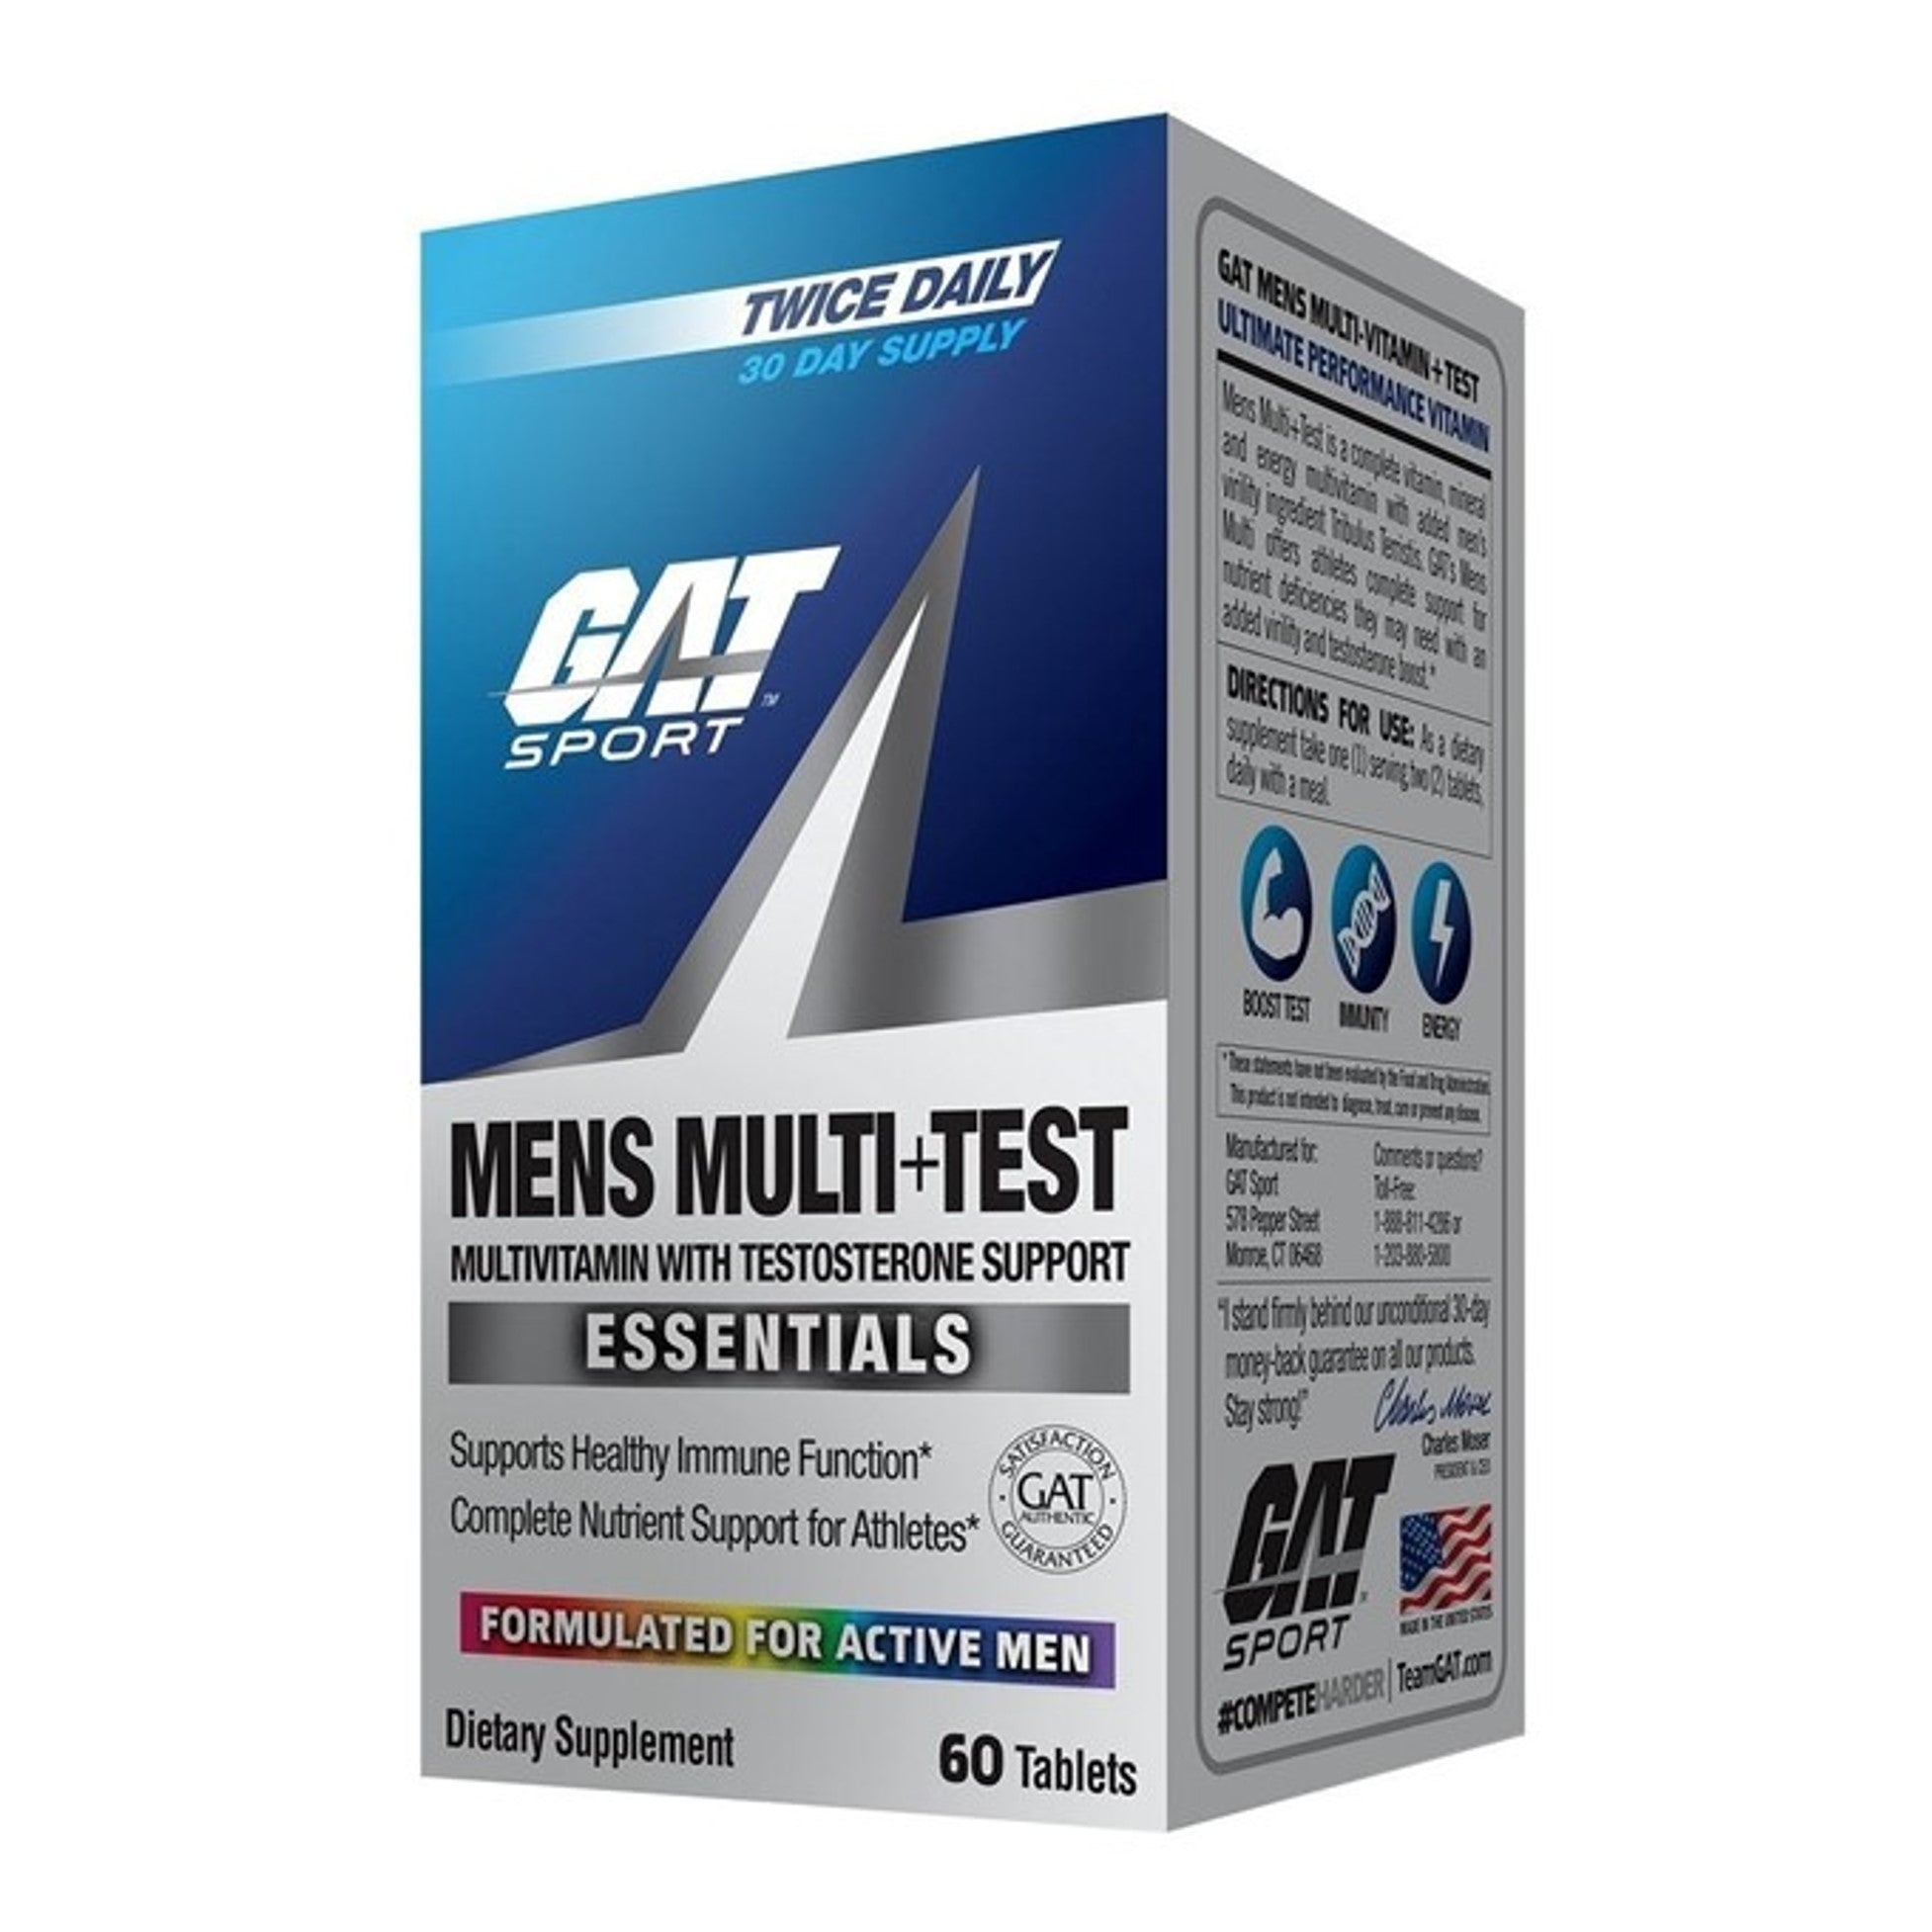 Gat Sport Multi + Test 60c